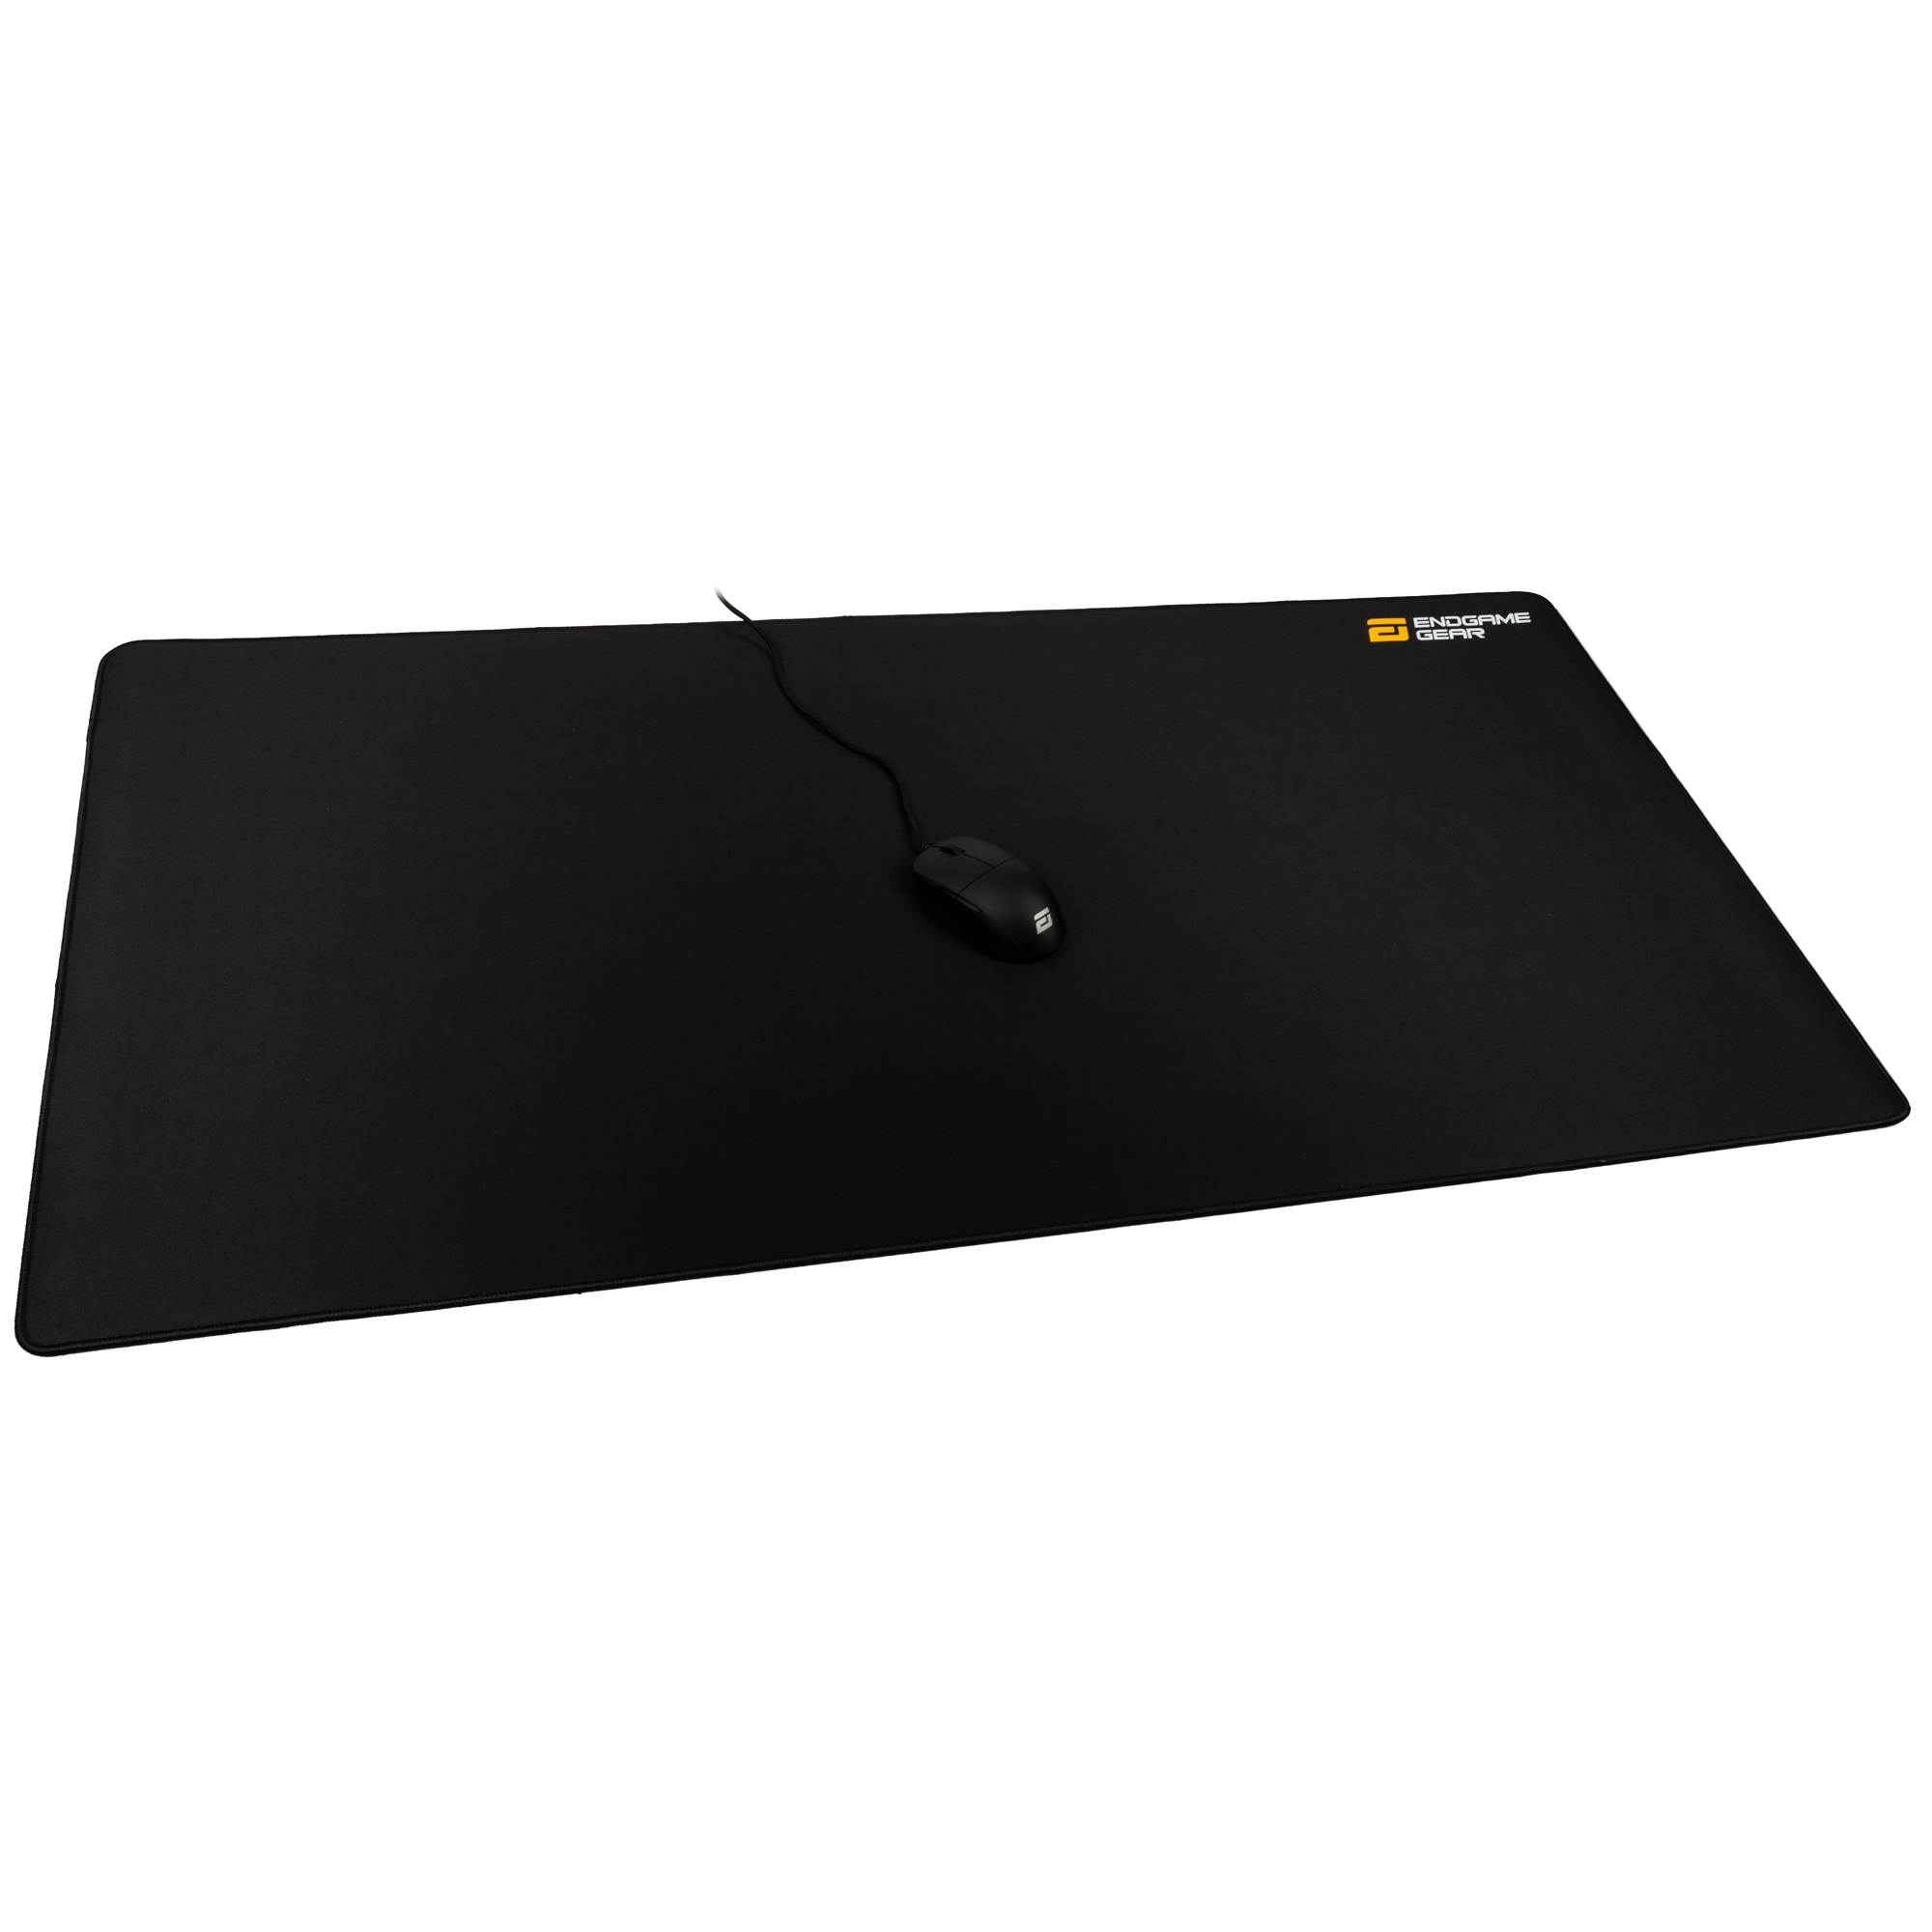 Endgame Gear - Endgame Gear MPJ-1200 3XL Gaming Surface Black 1200x600x3mm